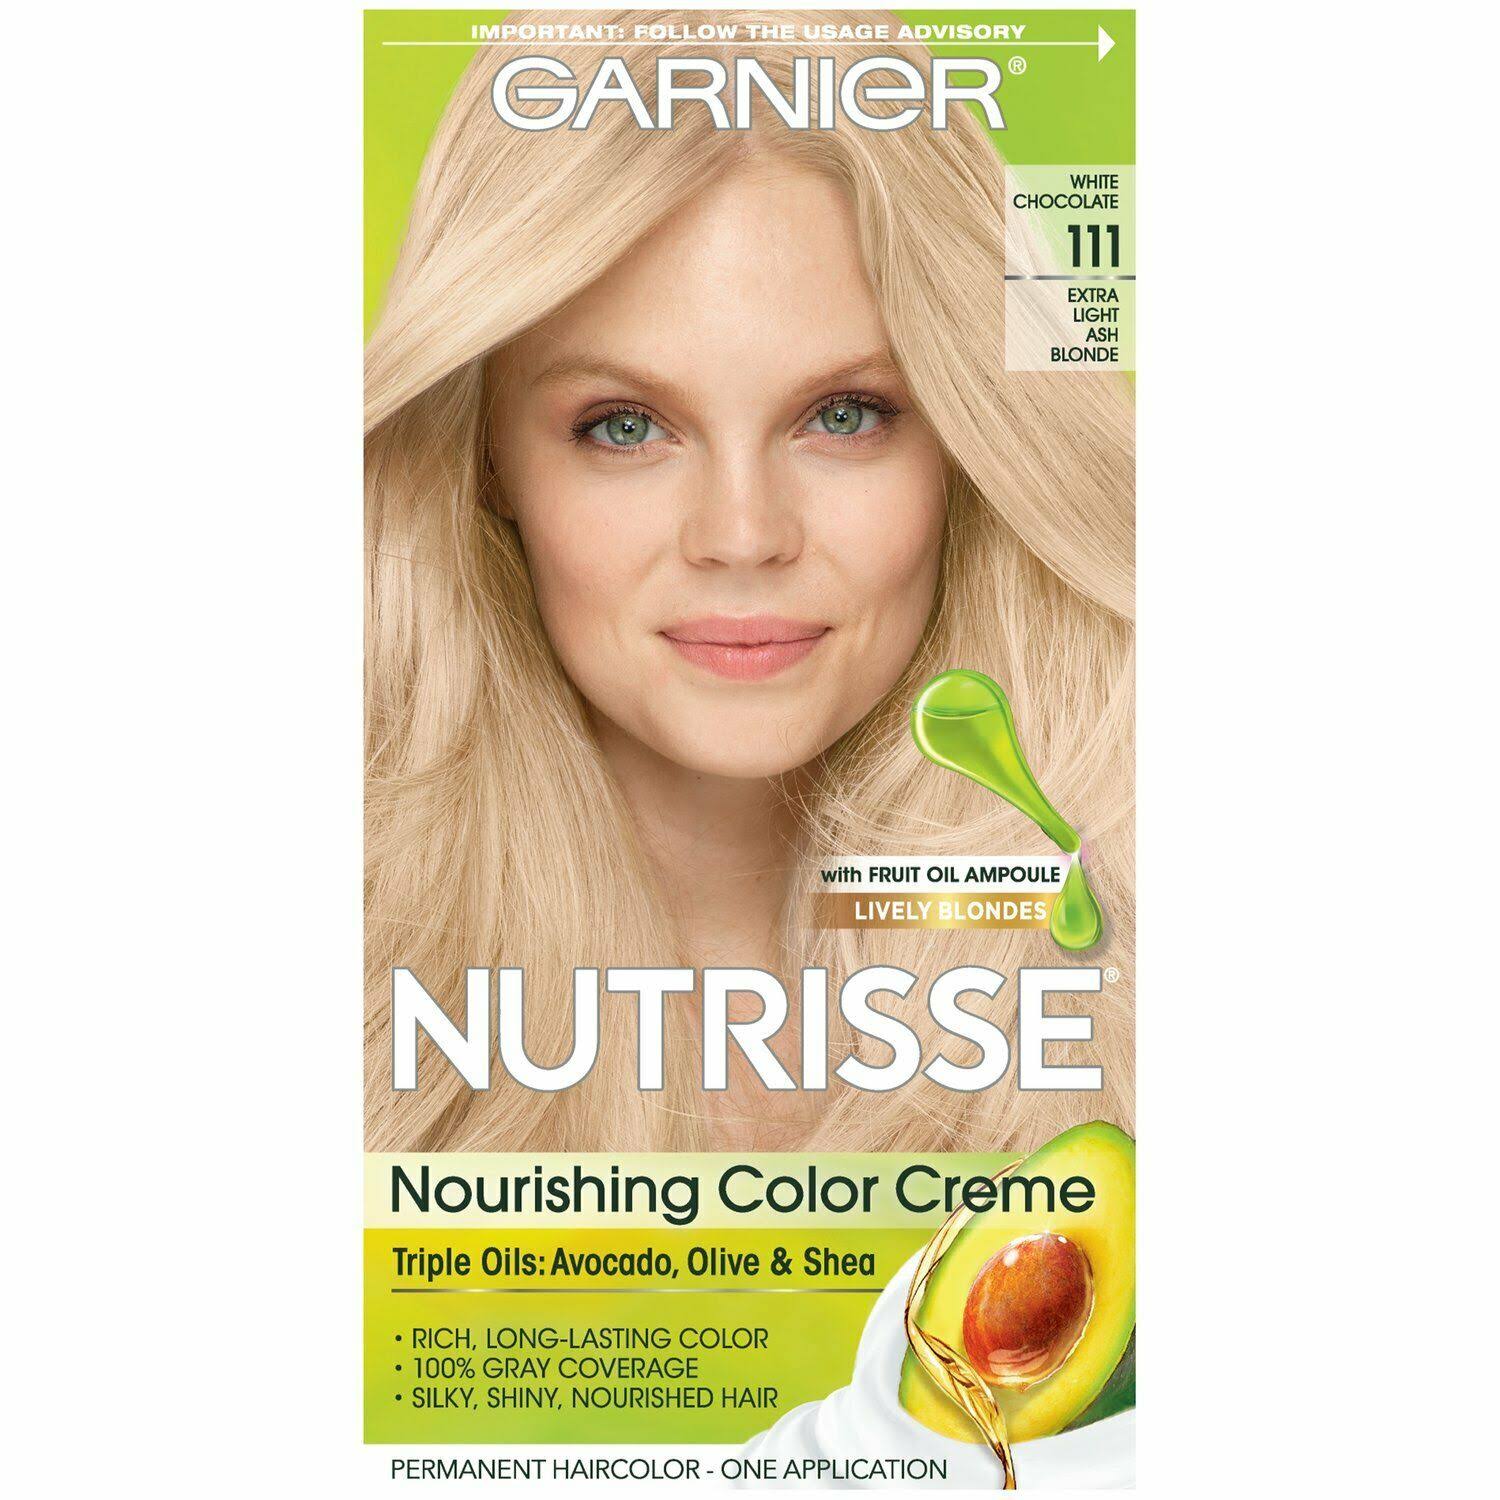 Garnier Nutrisse Nourishing Hair Color Creme - 111 Extra-Light Ash Blonde